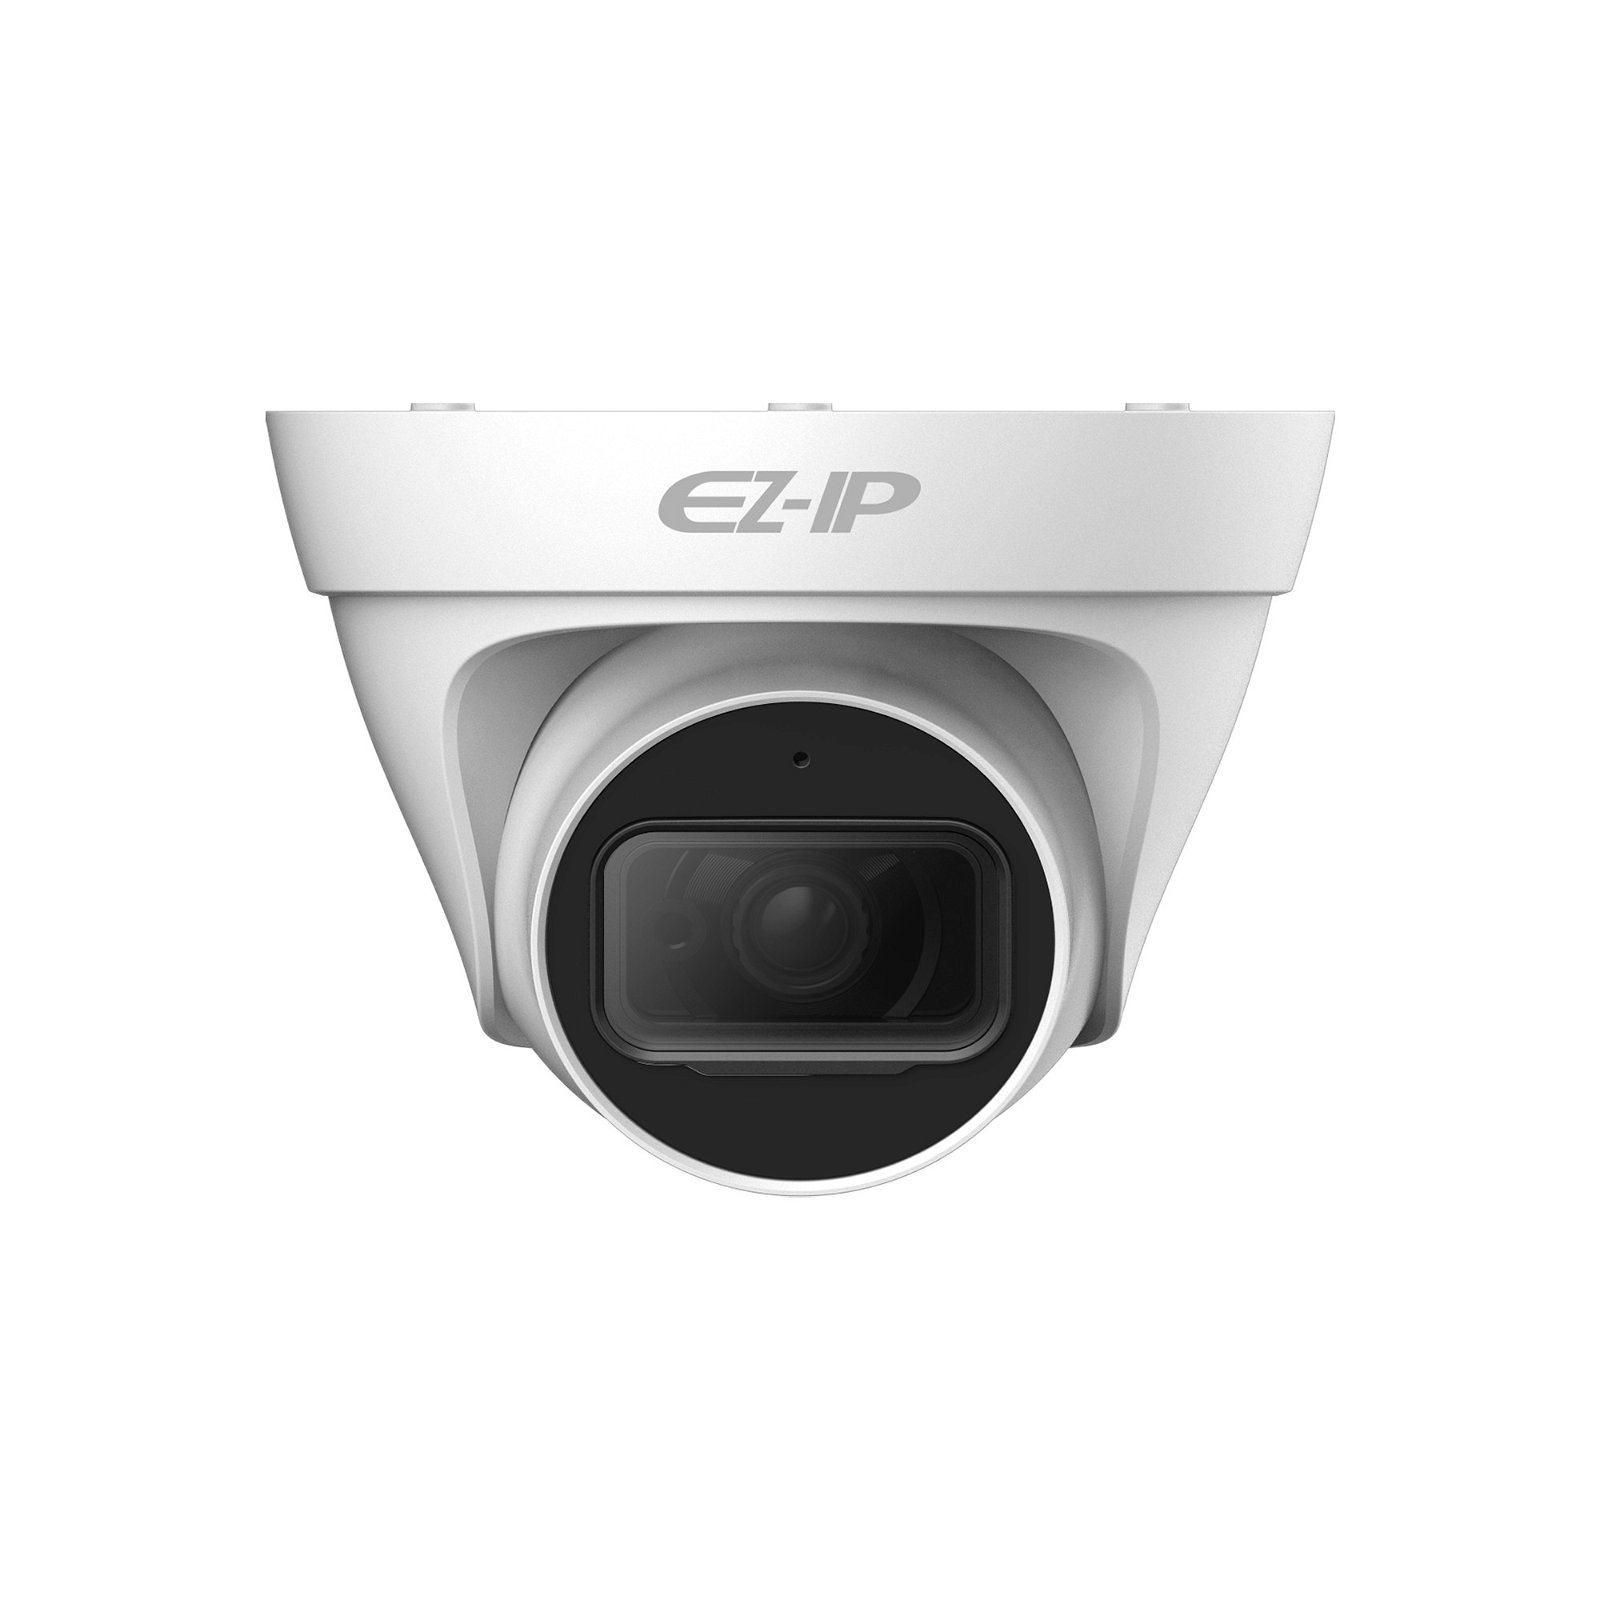 Dahua IP-Kamera EZ-IP 2 Mpx, 2,8 mm, PoE